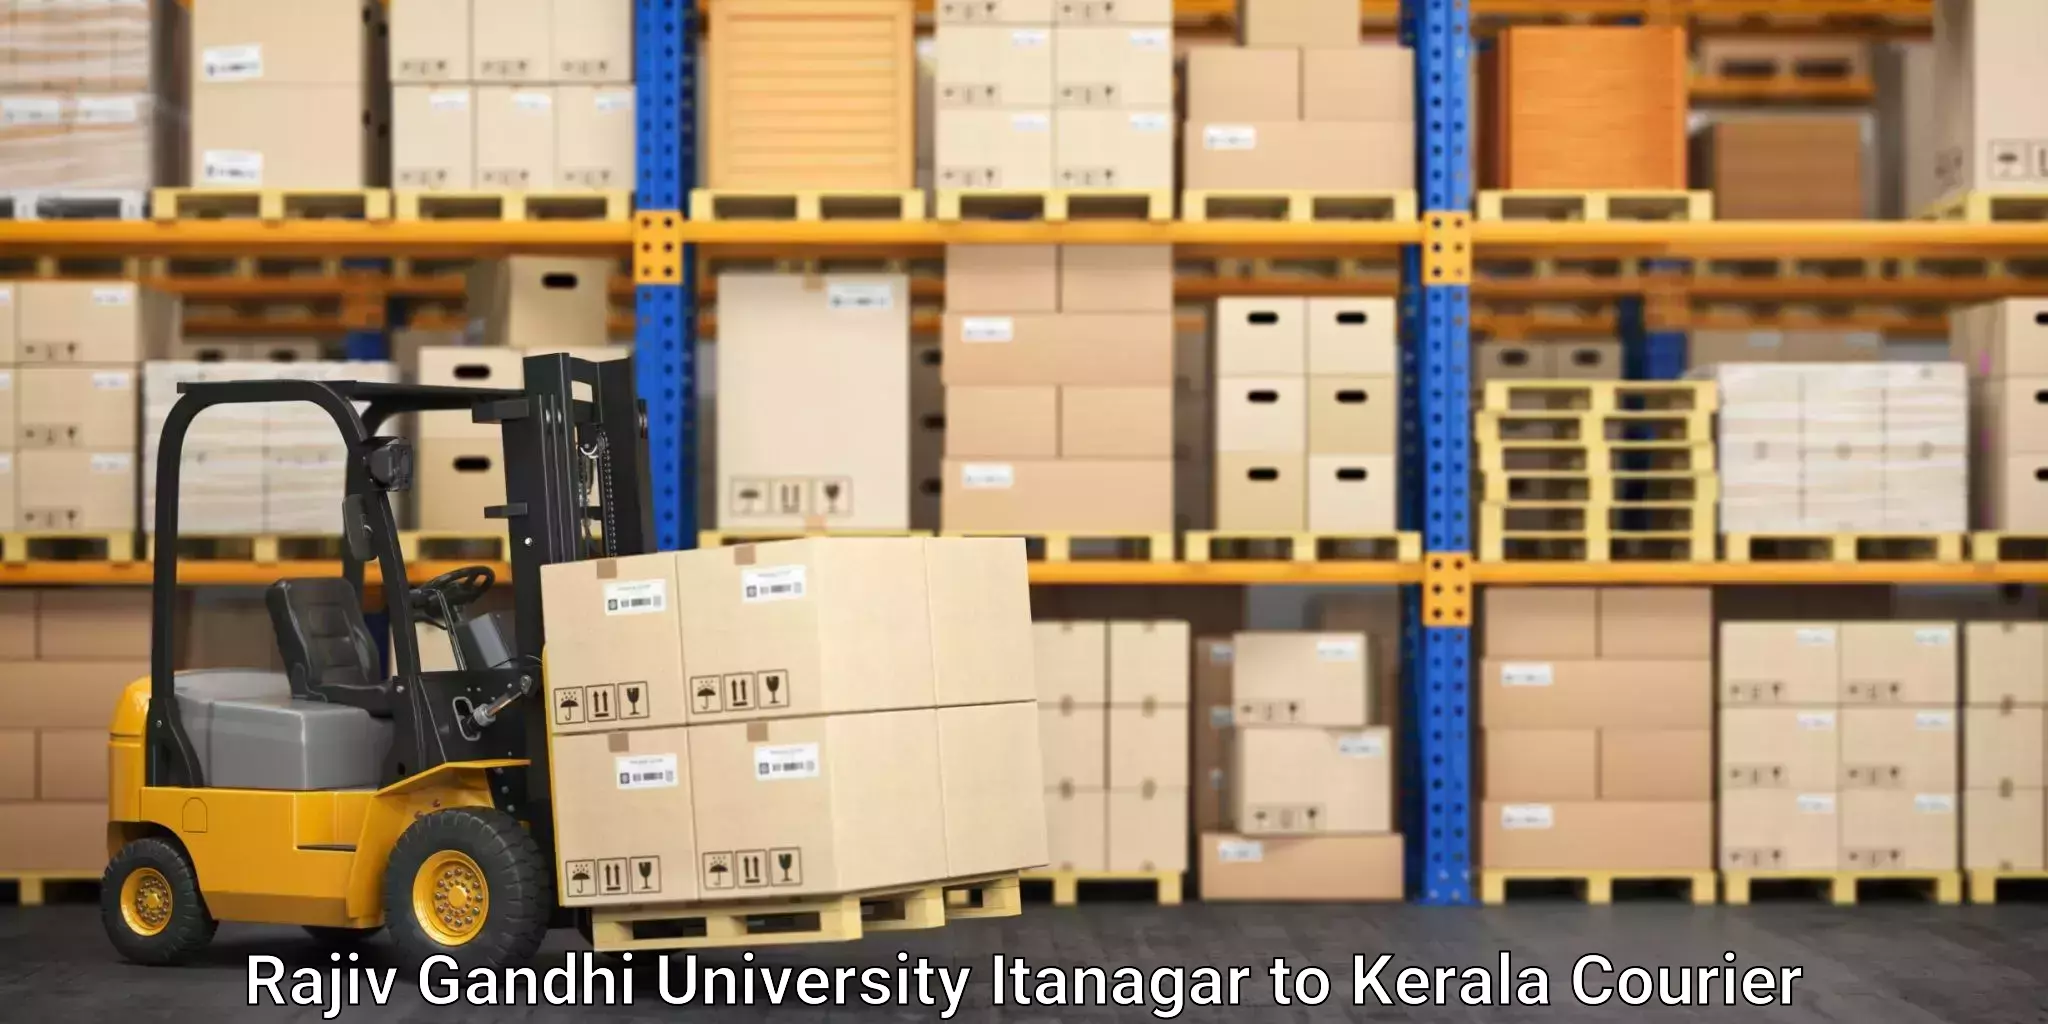 Express postal services Rajiv Gandhi University Itanagar to Cochin Port Kochi